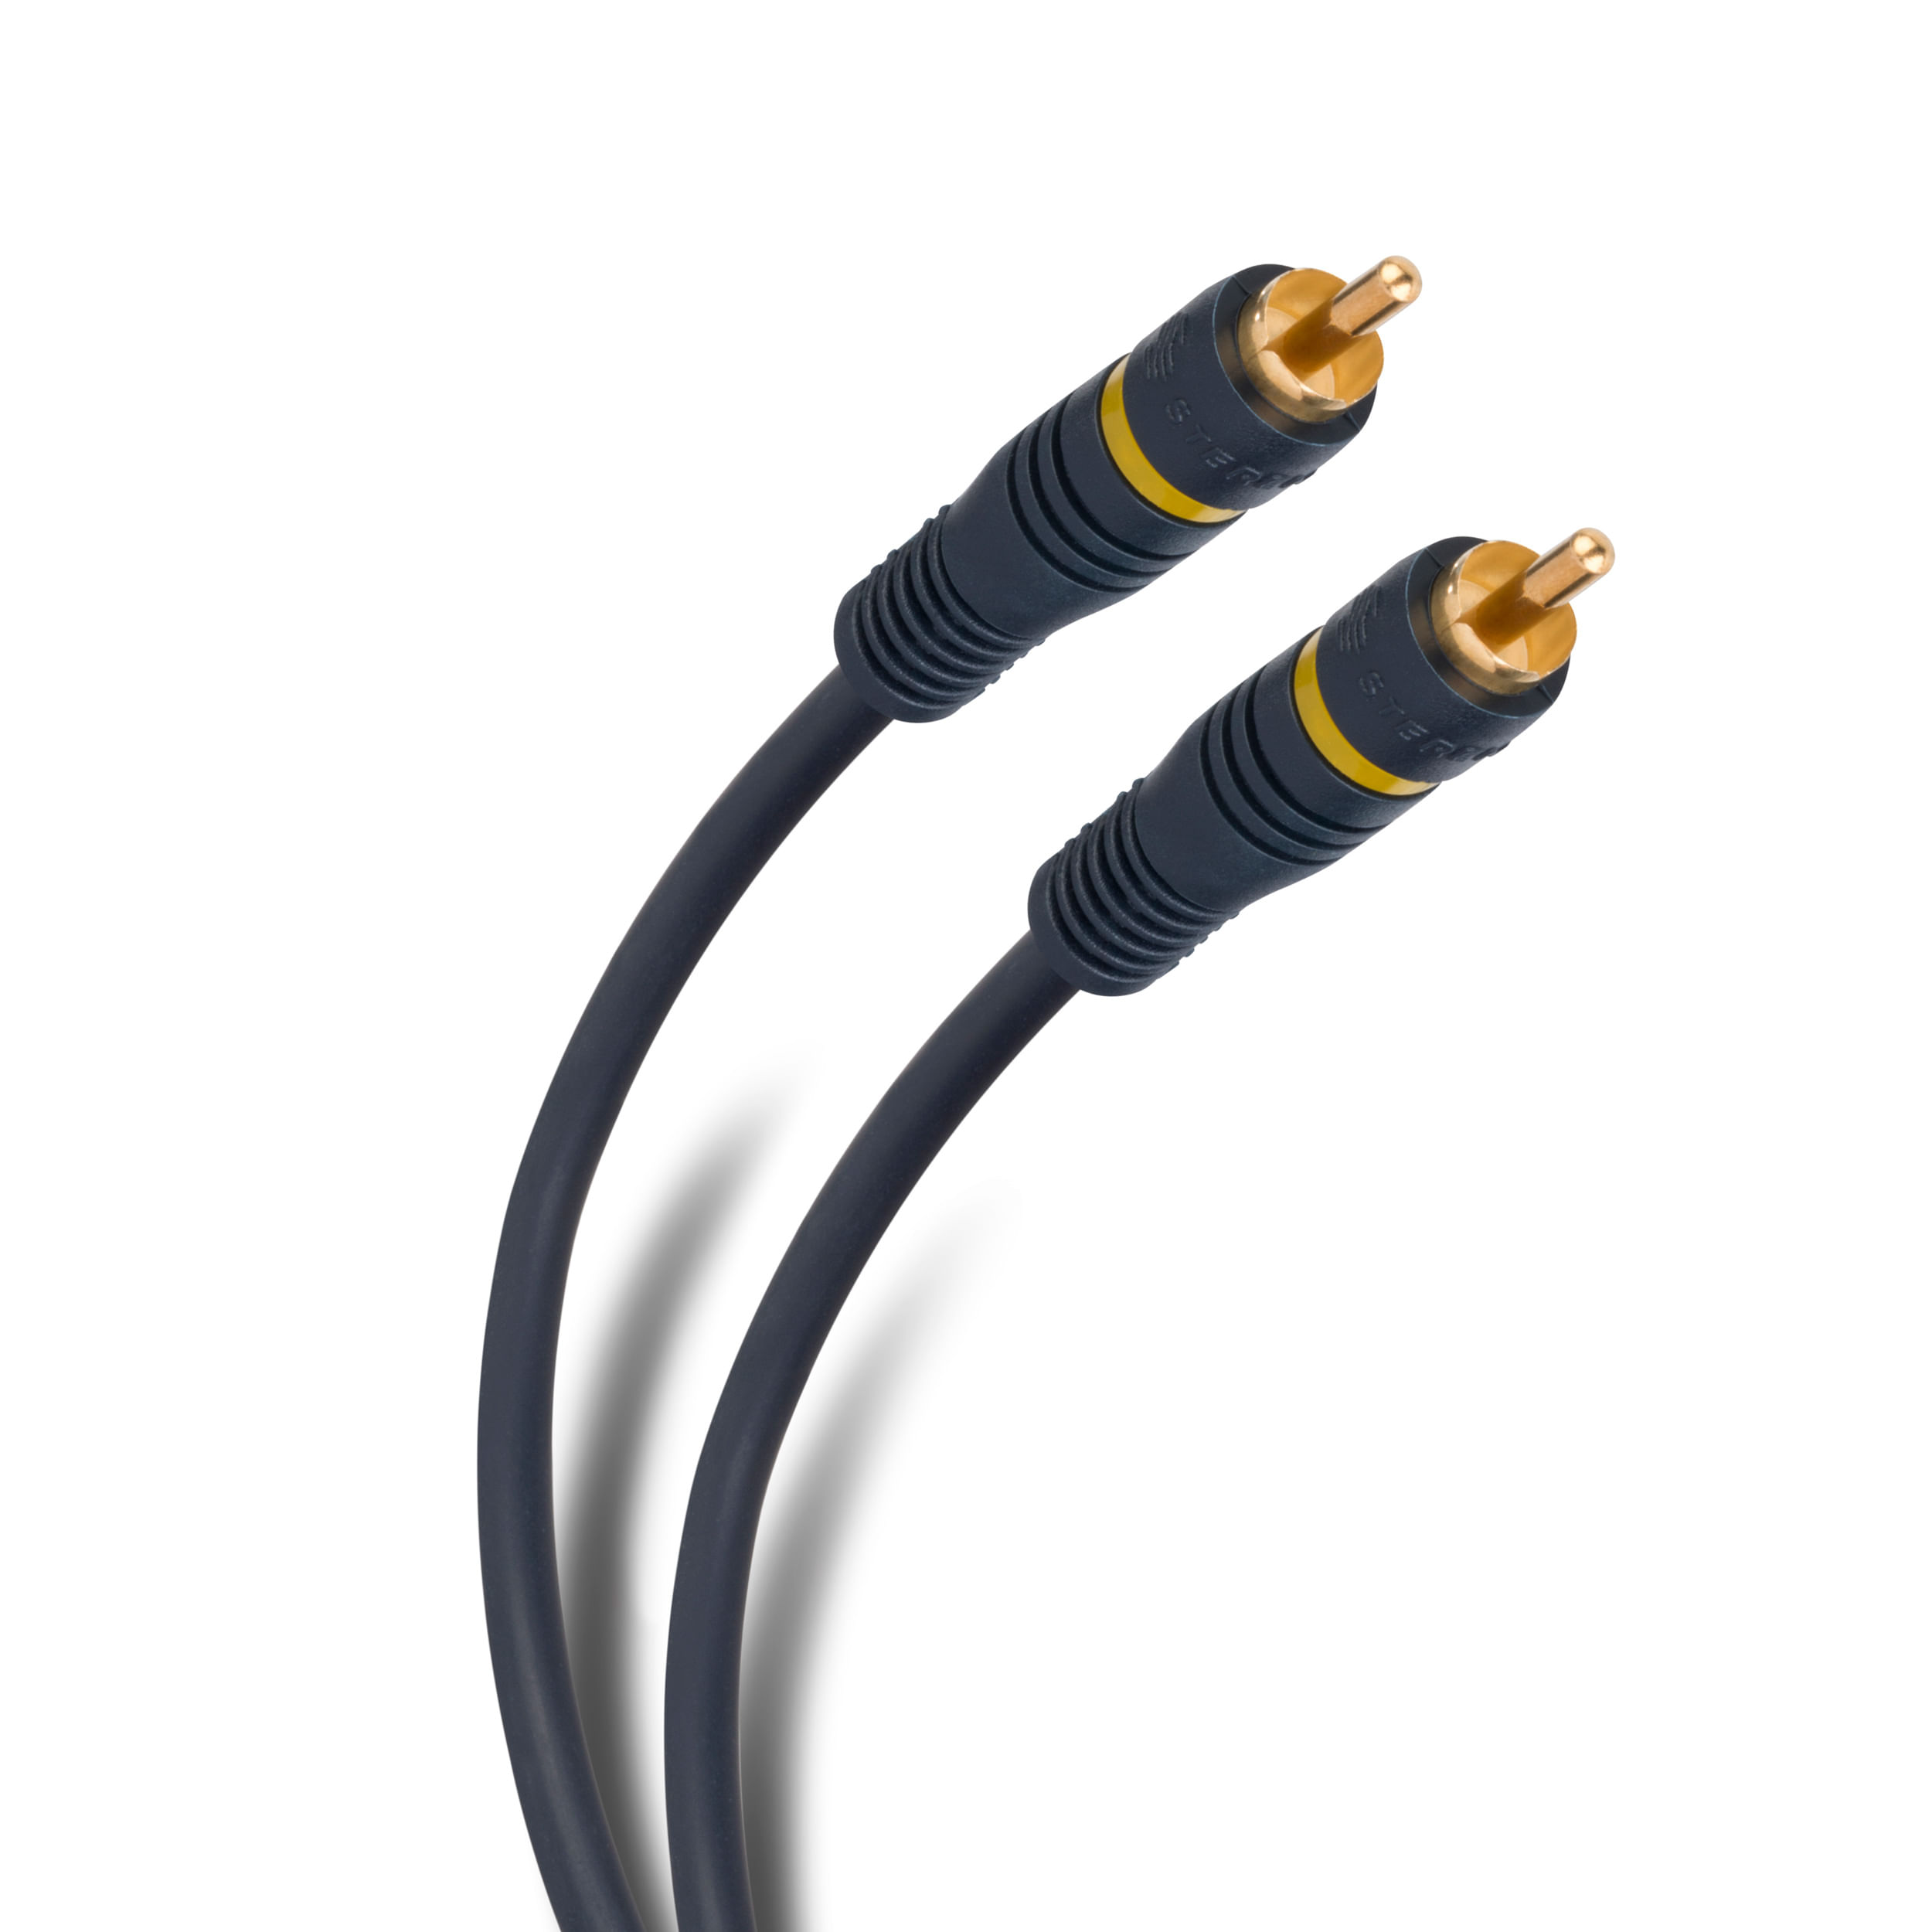 Cable coaxial digital - RCA de 3,6 m - Steren Colombia